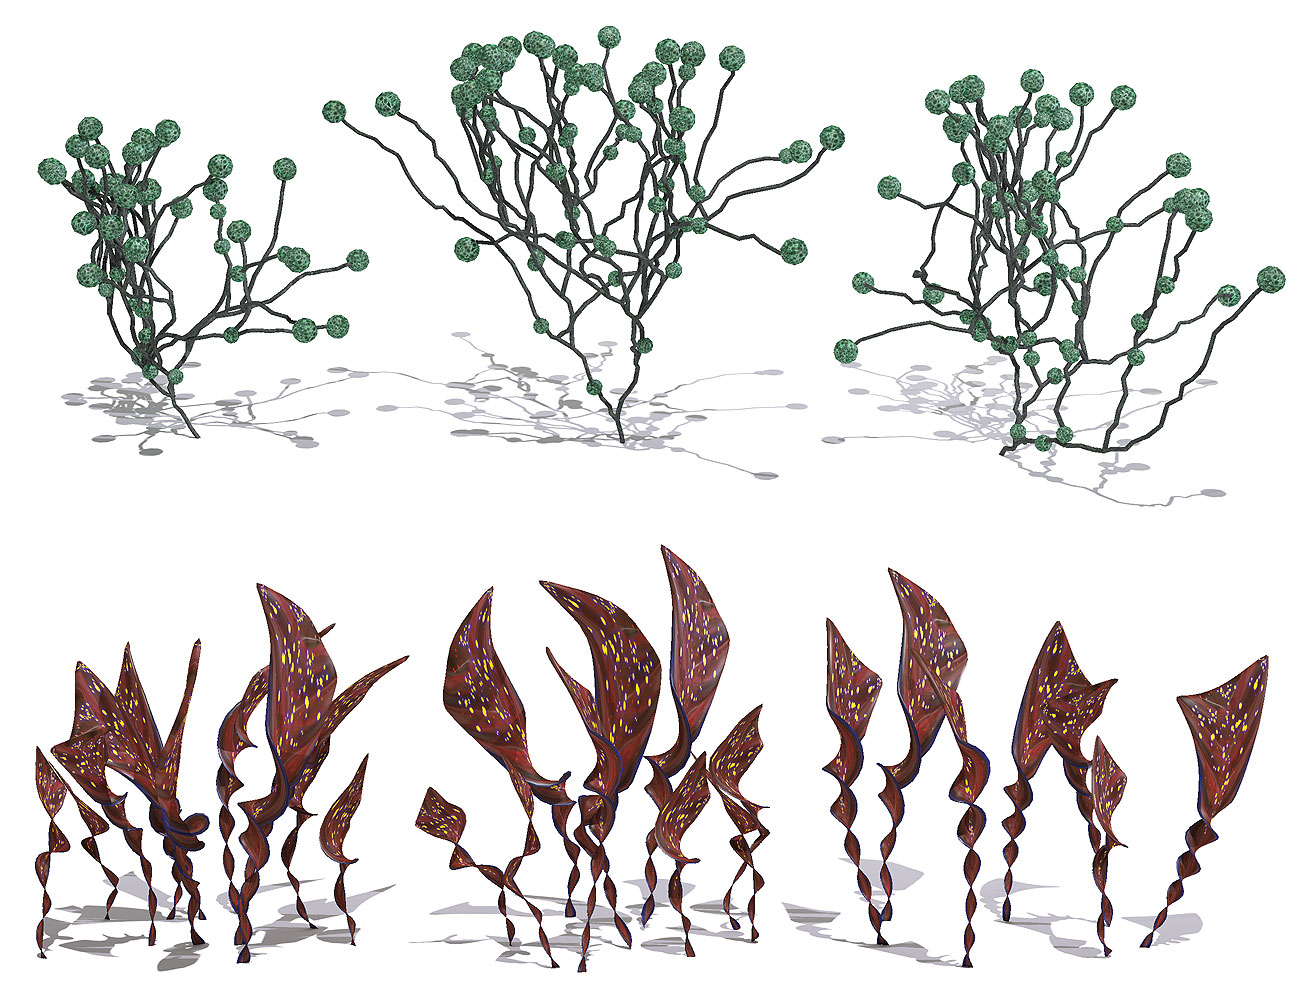 Alien Botanicals 2 Iray by: Orestes Graphics, 3D Models by Daz 3D